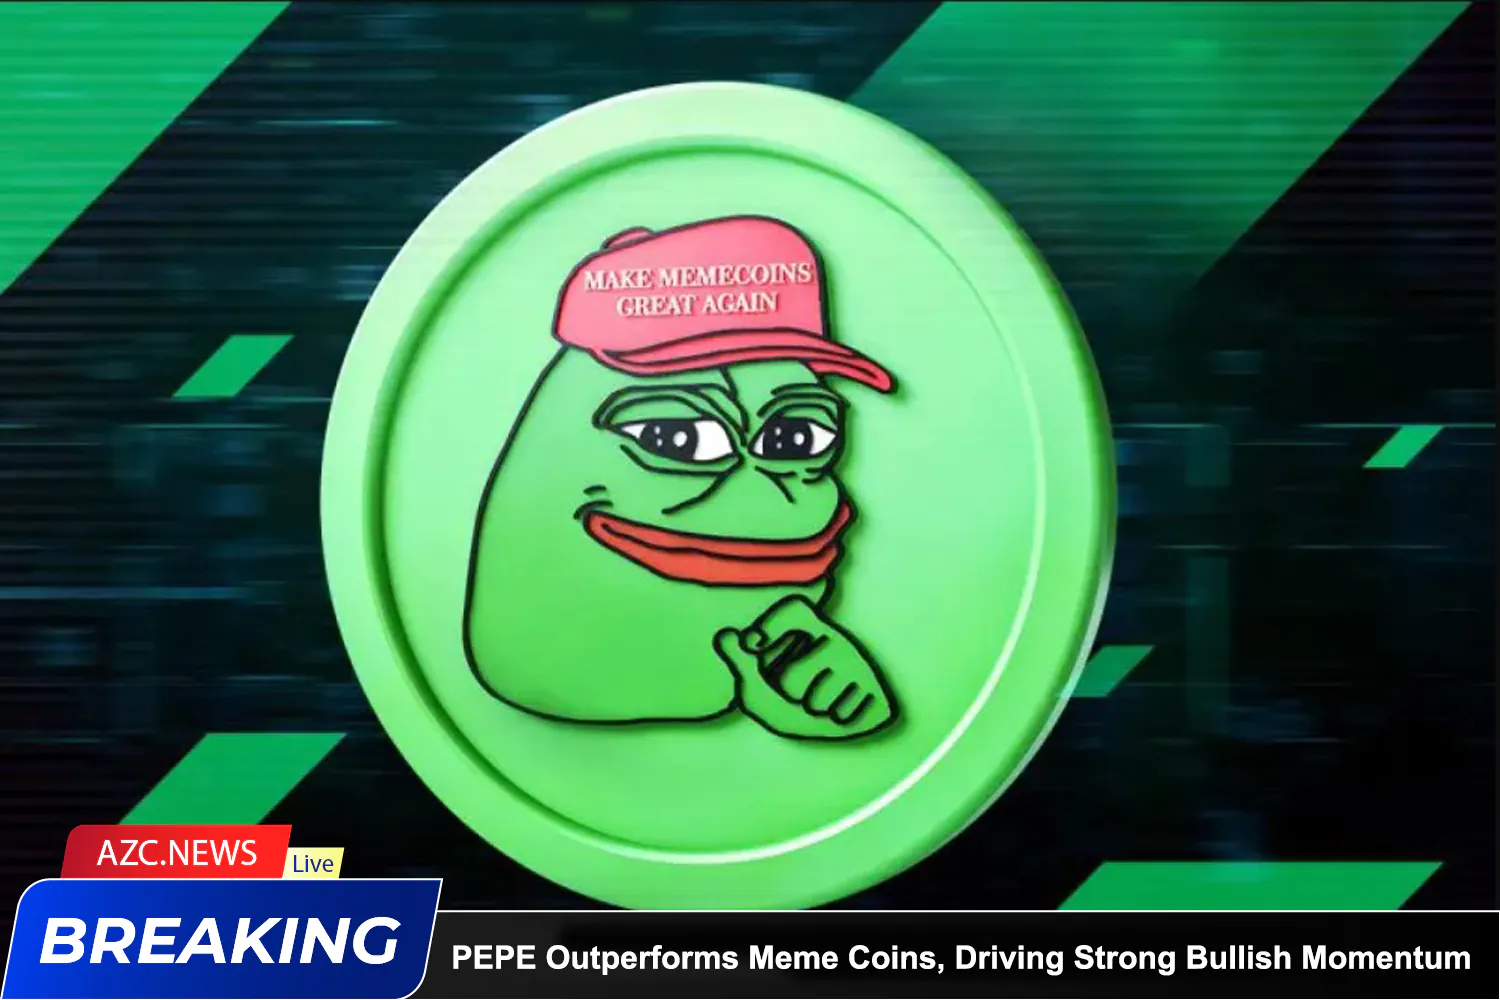 Azcnews Pepe Outperforms Meme Coins, Driving Strong Bullish Momentum